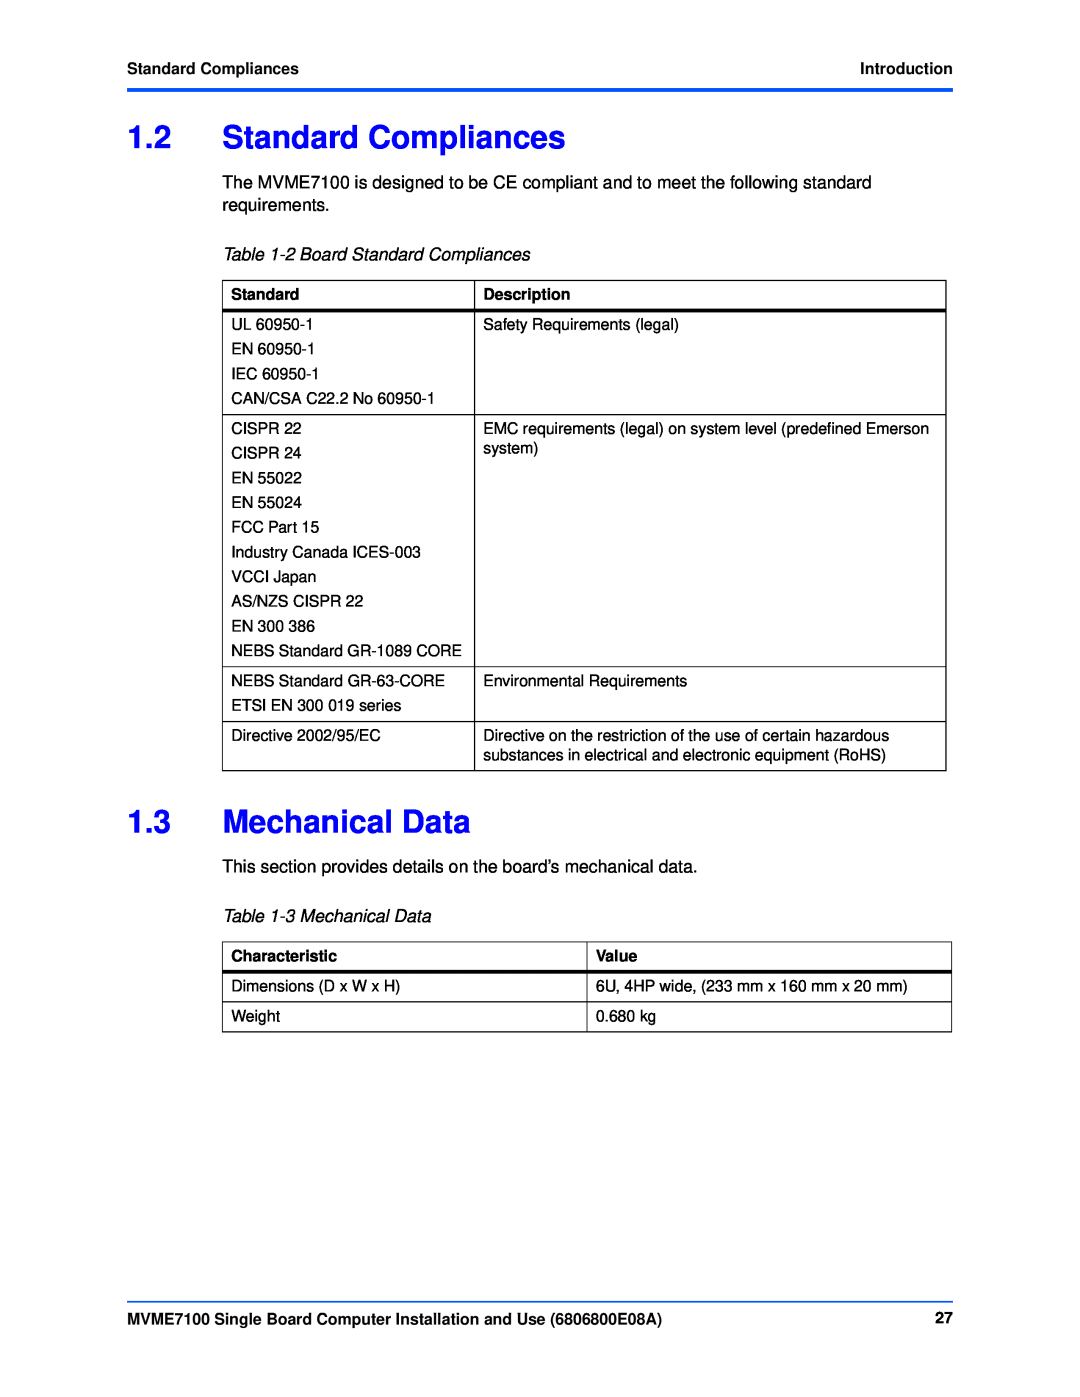 Emerson MVME7100 2 Board Standard Compliances, 3 Mechanical Data, Introduction, Description, Characteristic, Value 